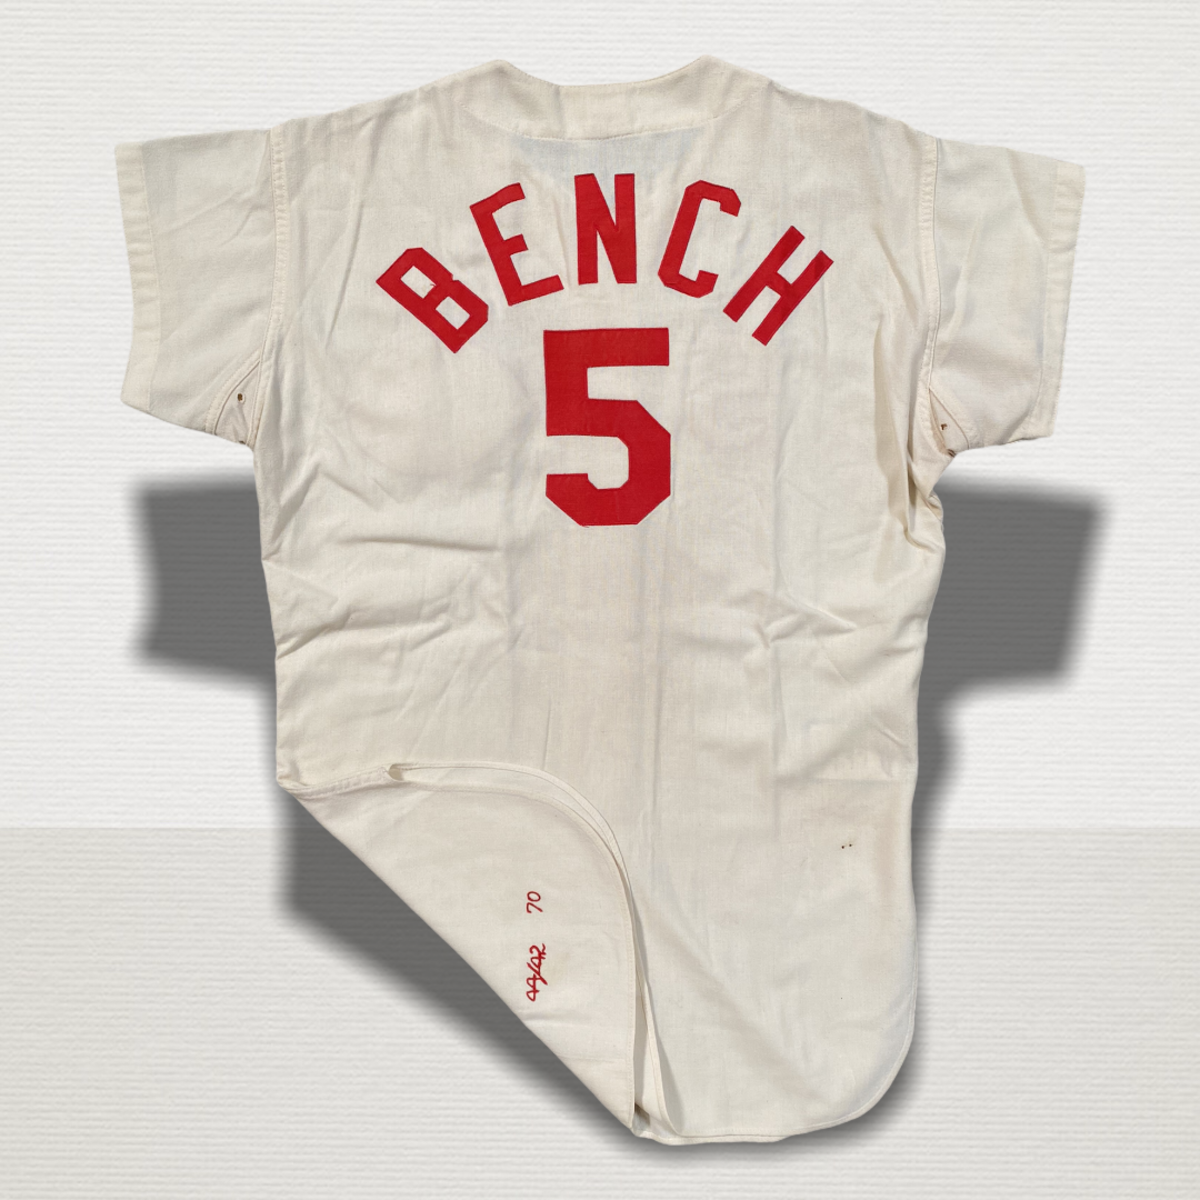 Johnny Bench 1970 game-worn jersey.